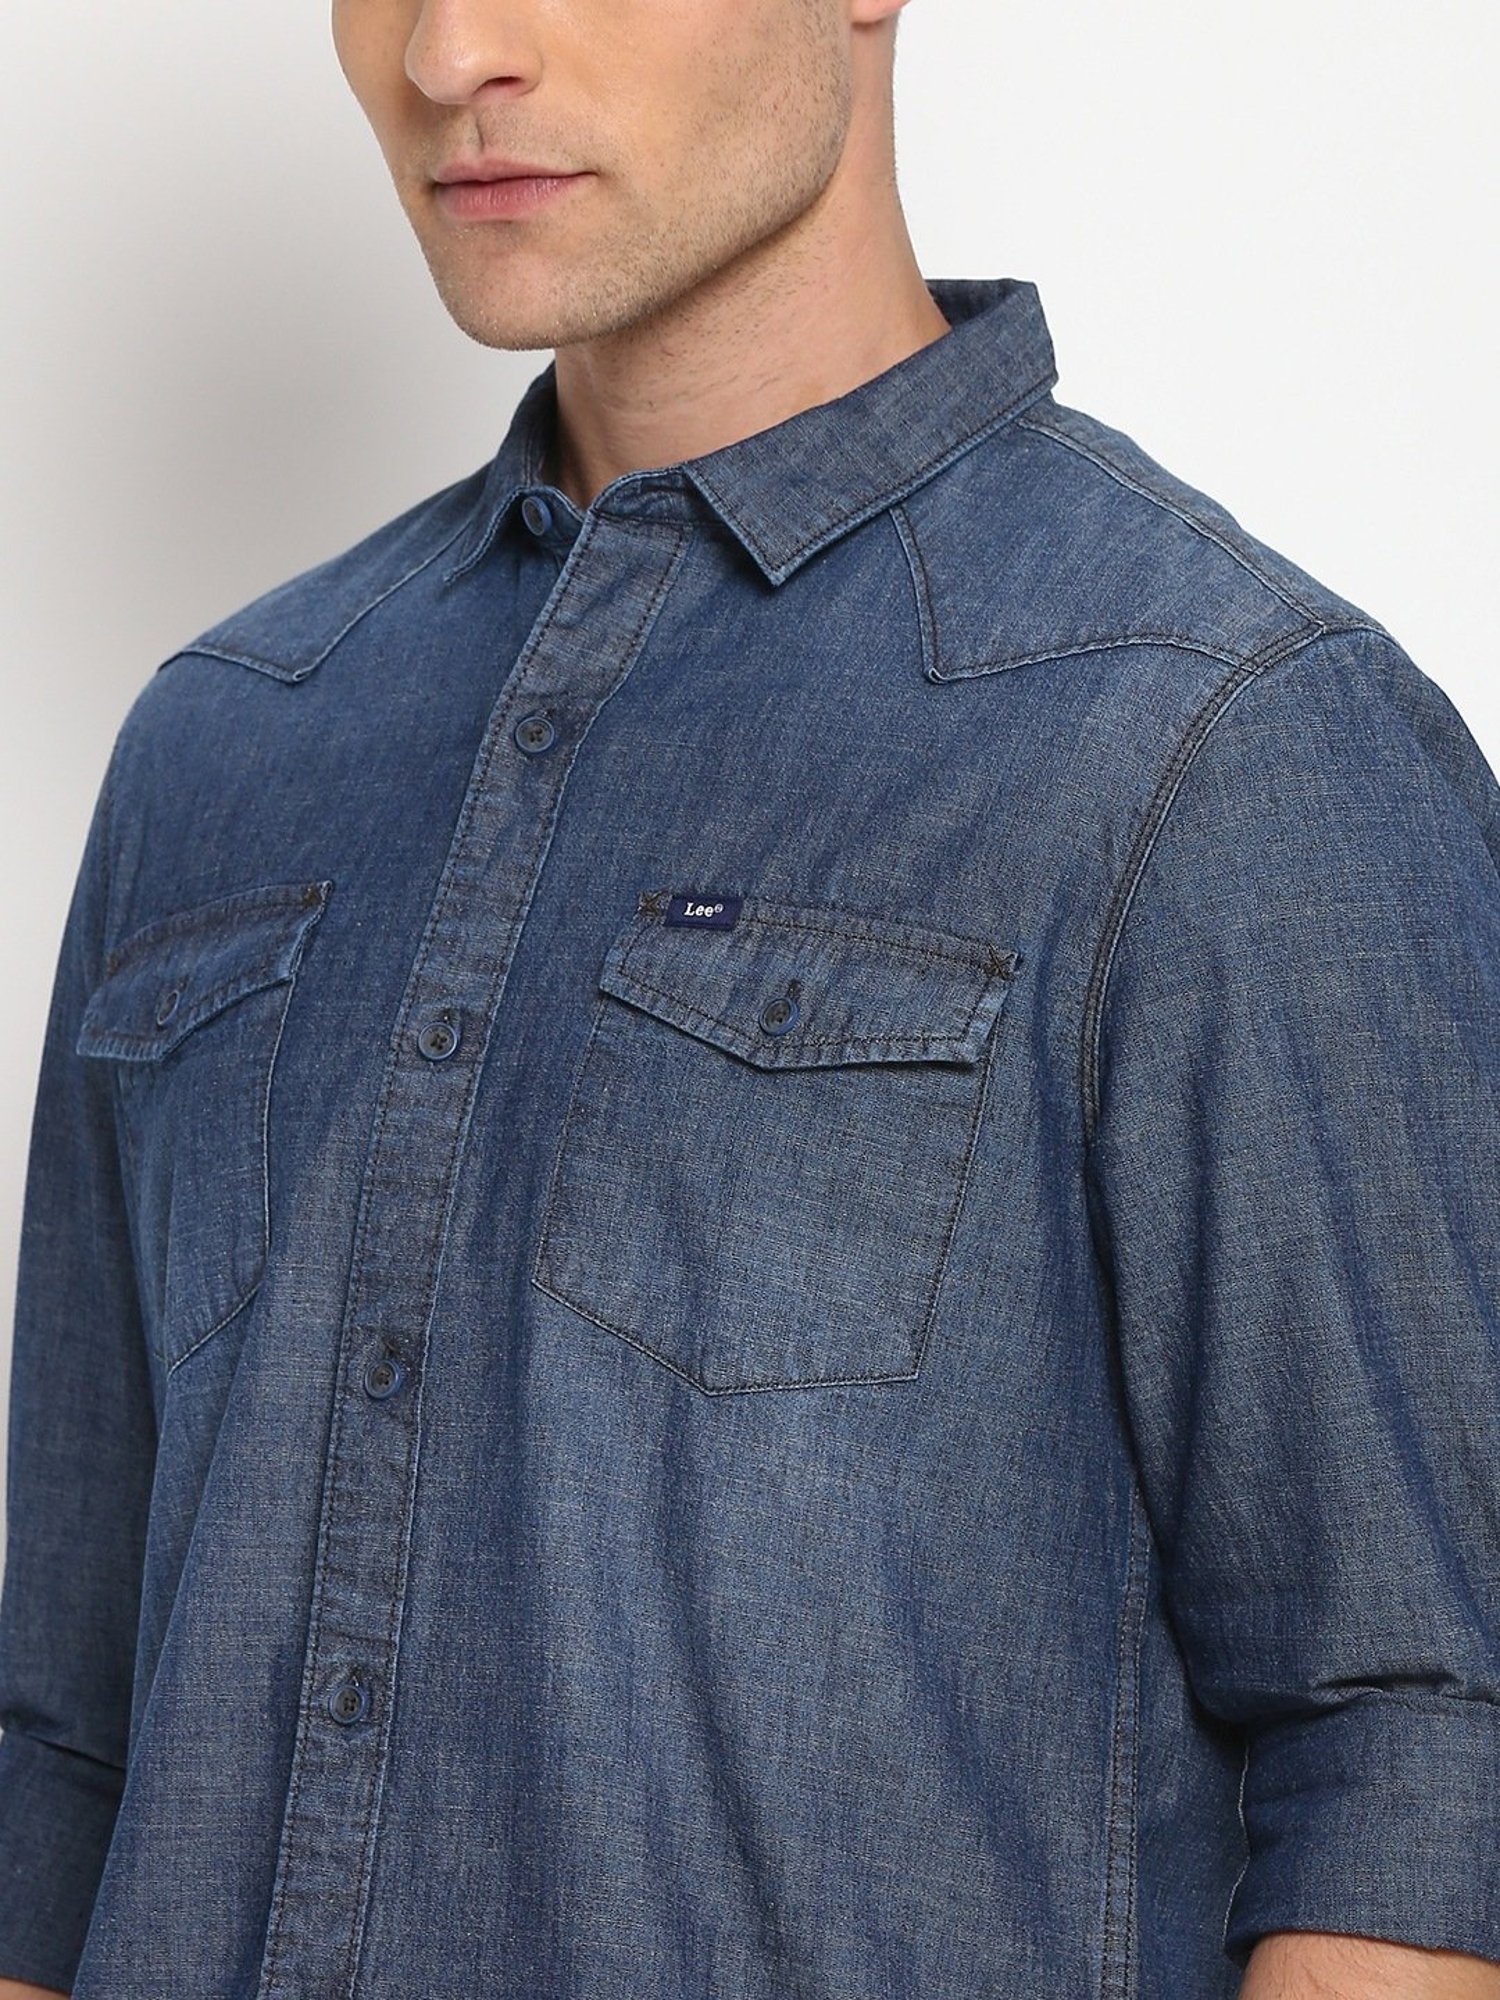 Vintage Lee Jeans Shirt Oldschool Blue Denim Ripped Men Women Shirt Button  up Size L / XL - Etsy